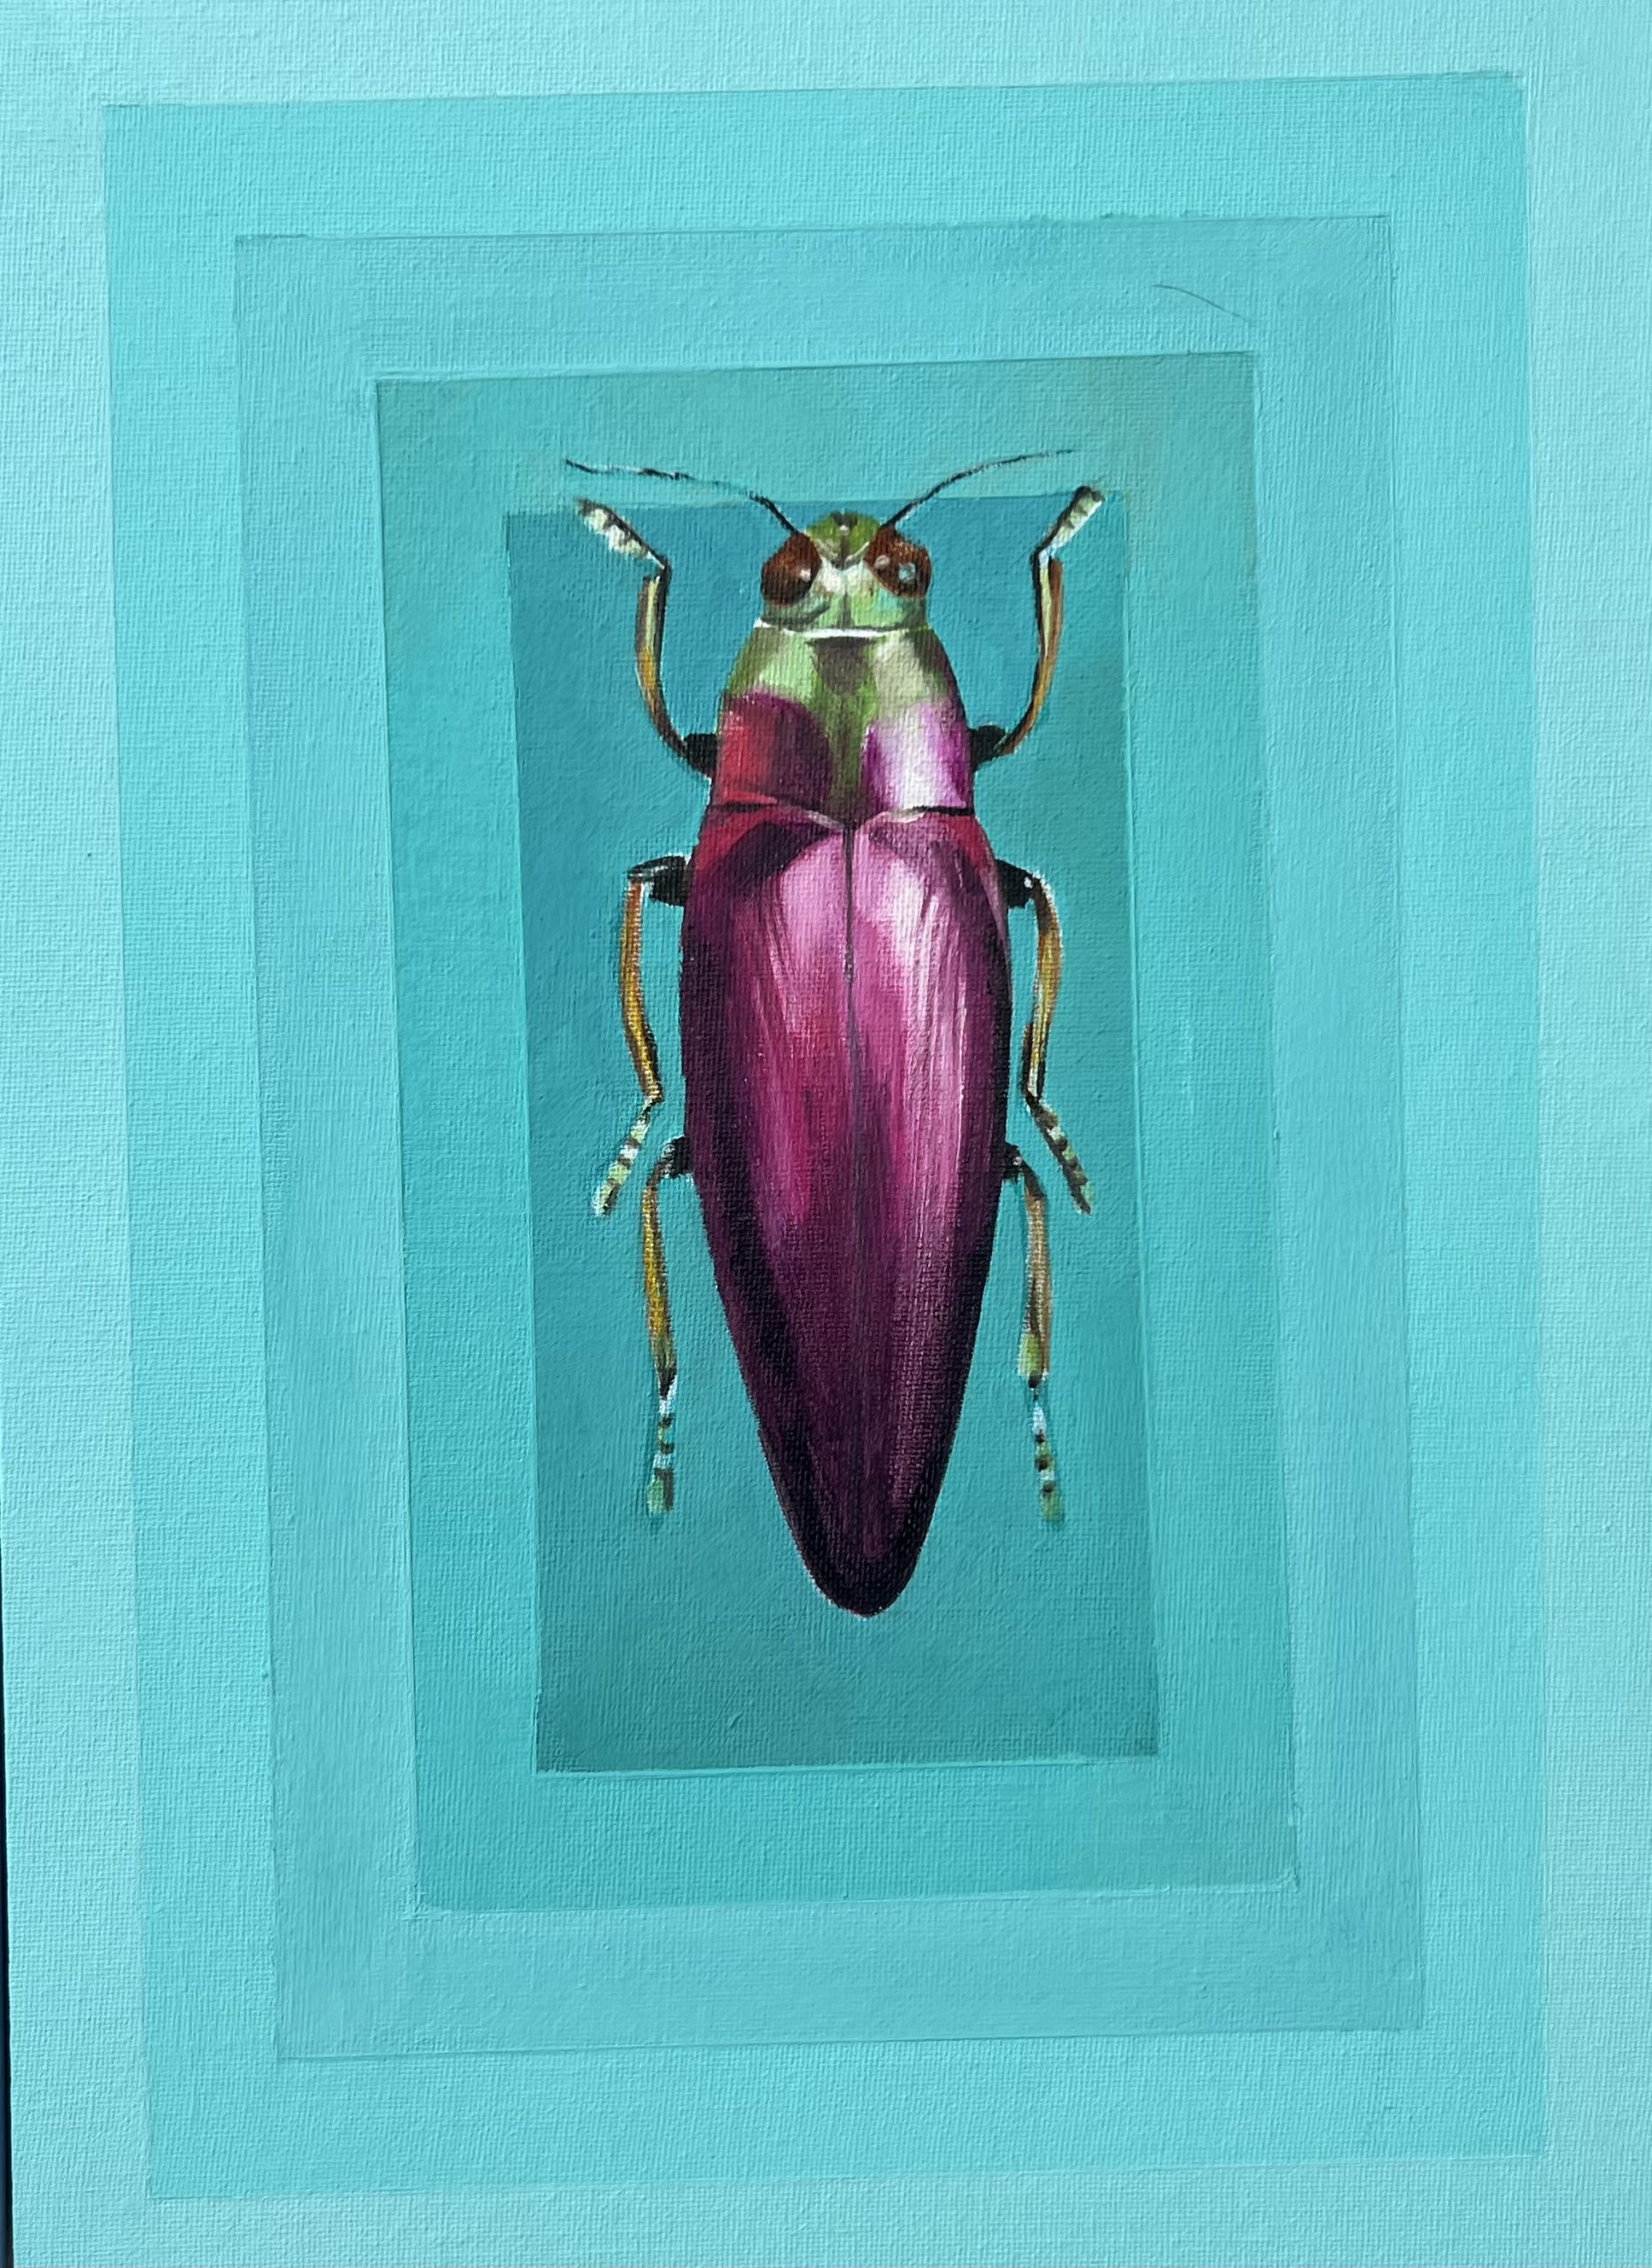 Teal Beetle